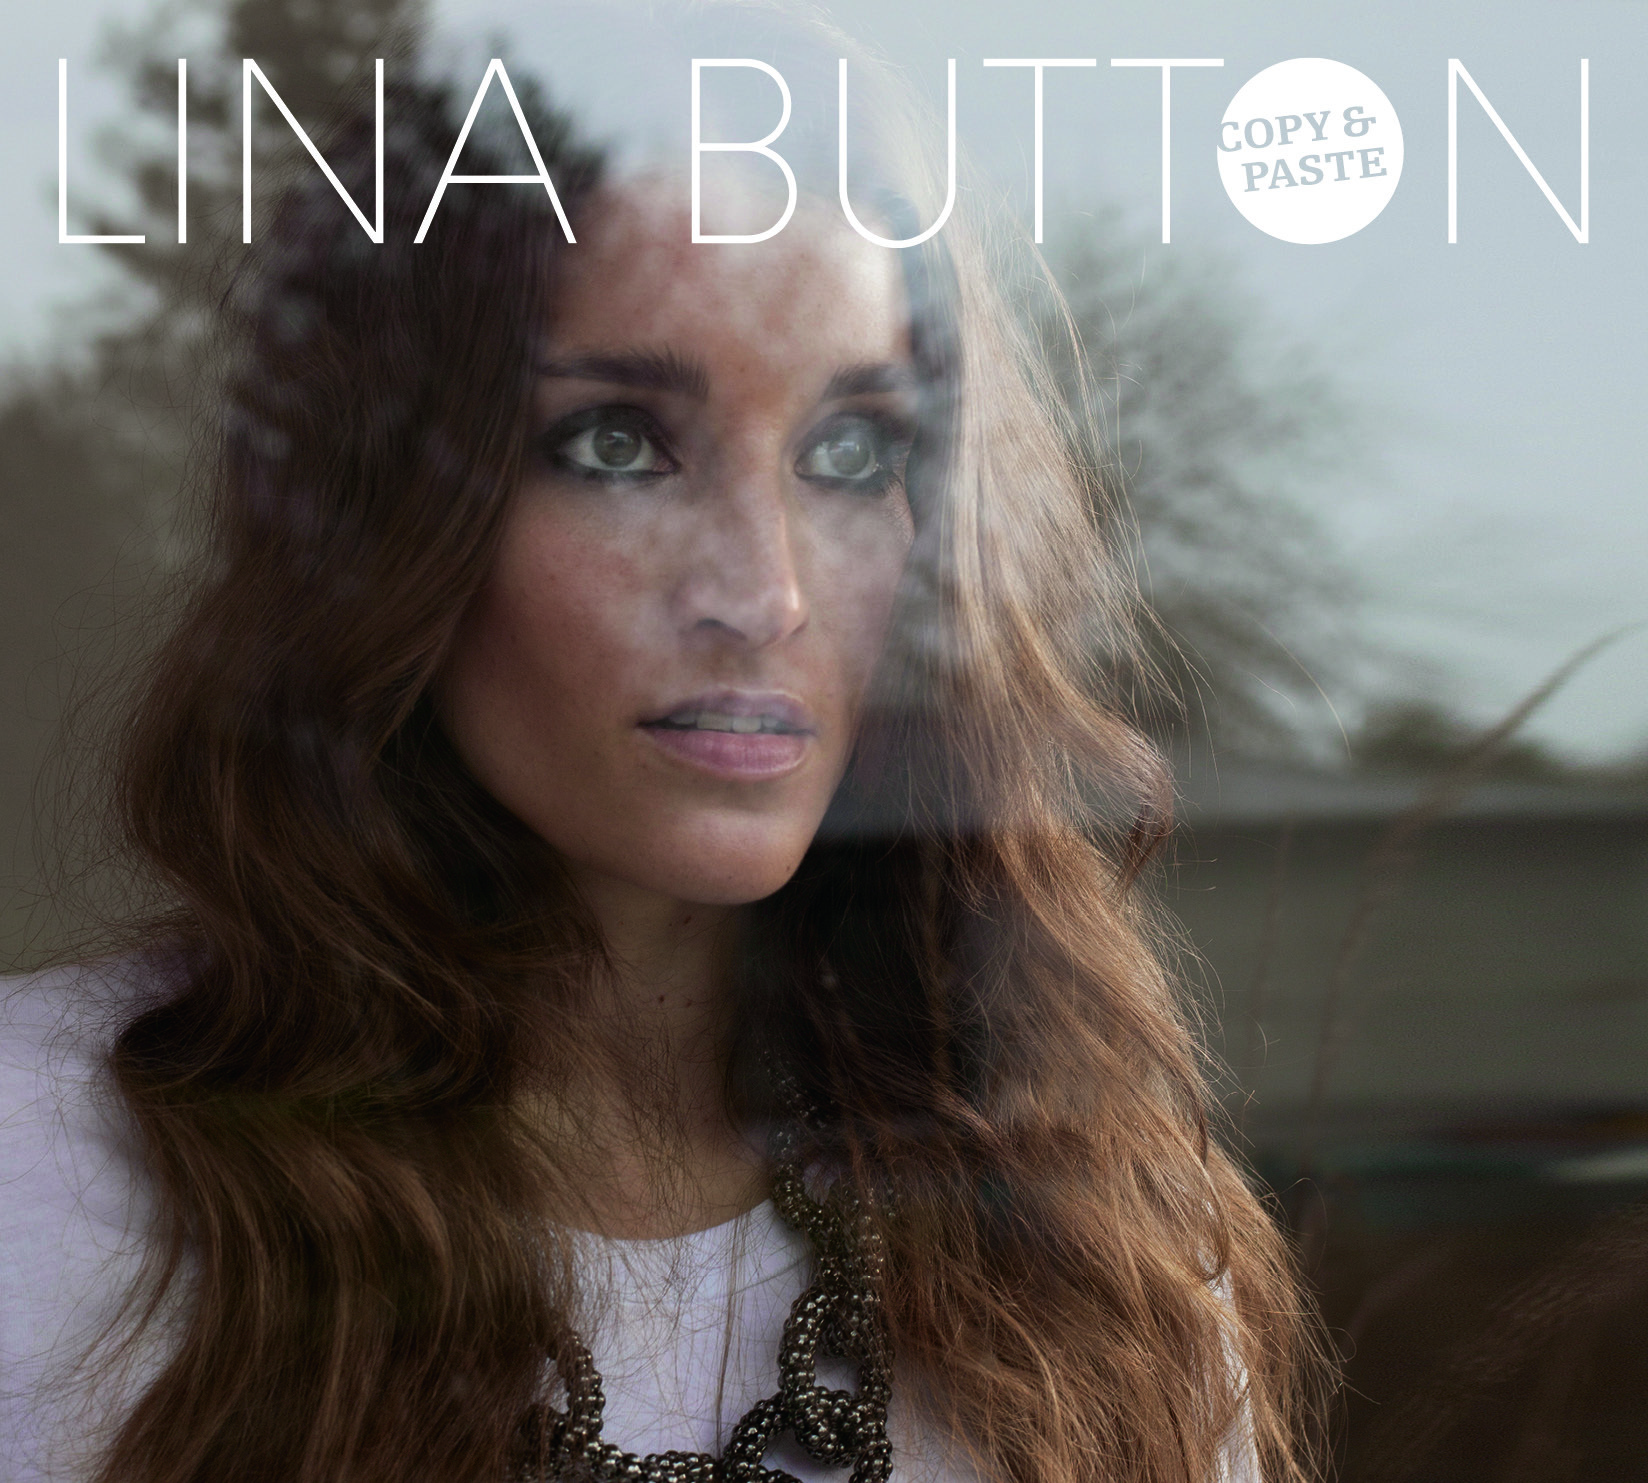 2013
Lina Button
Copy & Paste